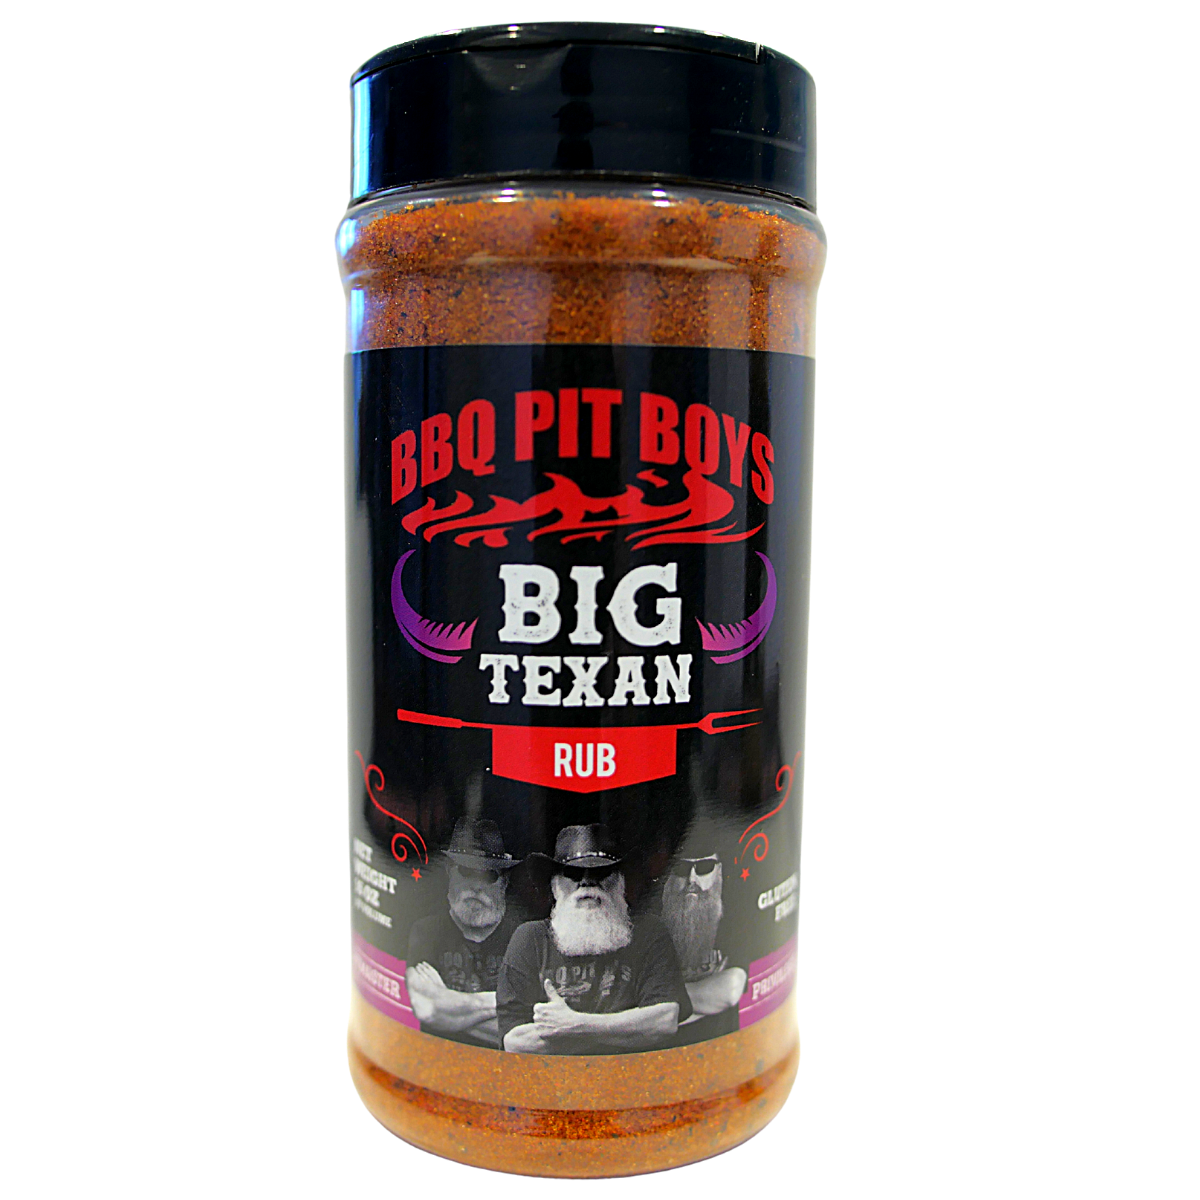 Bbq Pit Boys Big Texan Rub